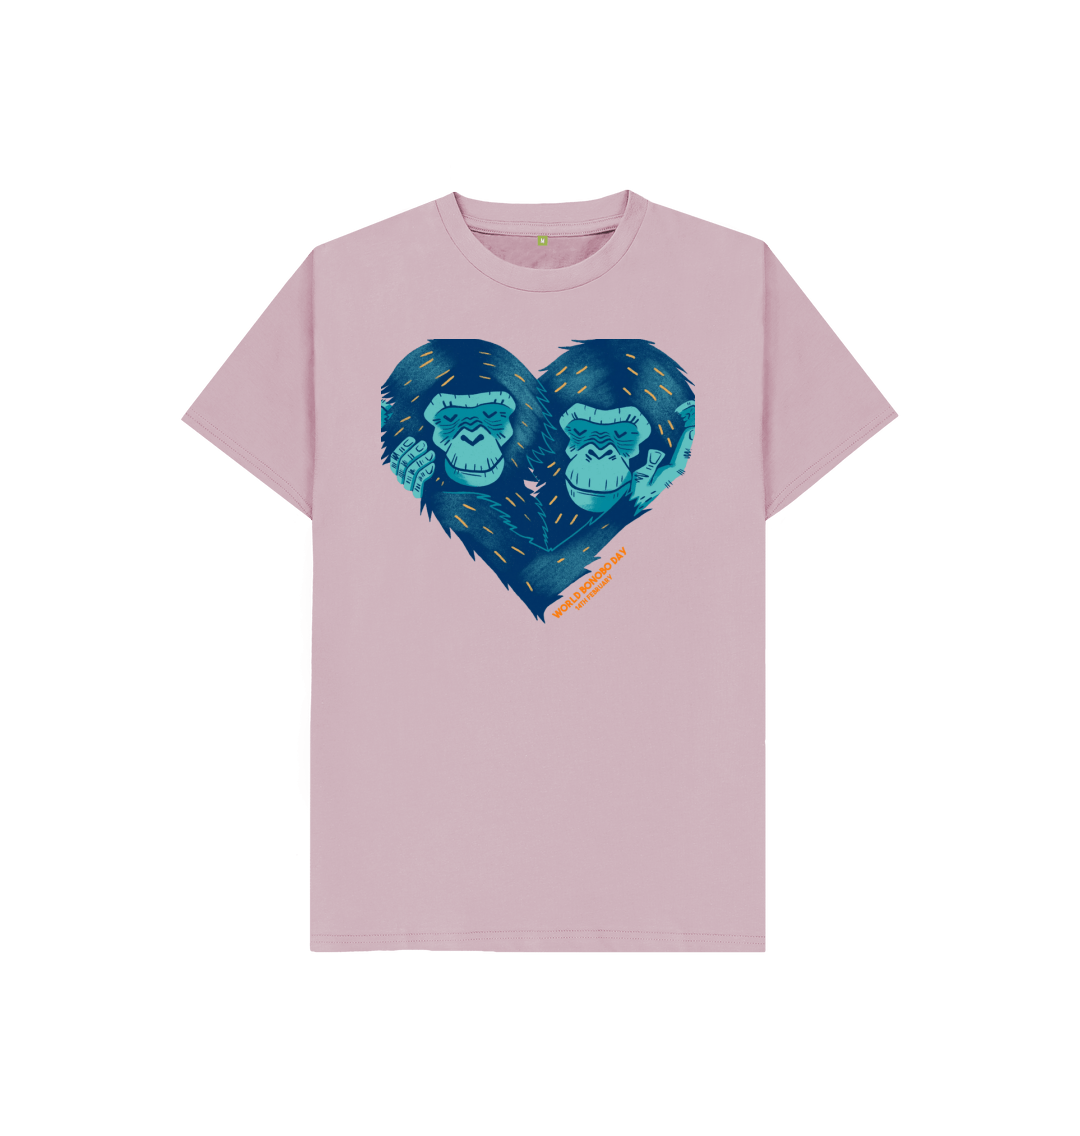 T-shirt Kids World Bonobo Day